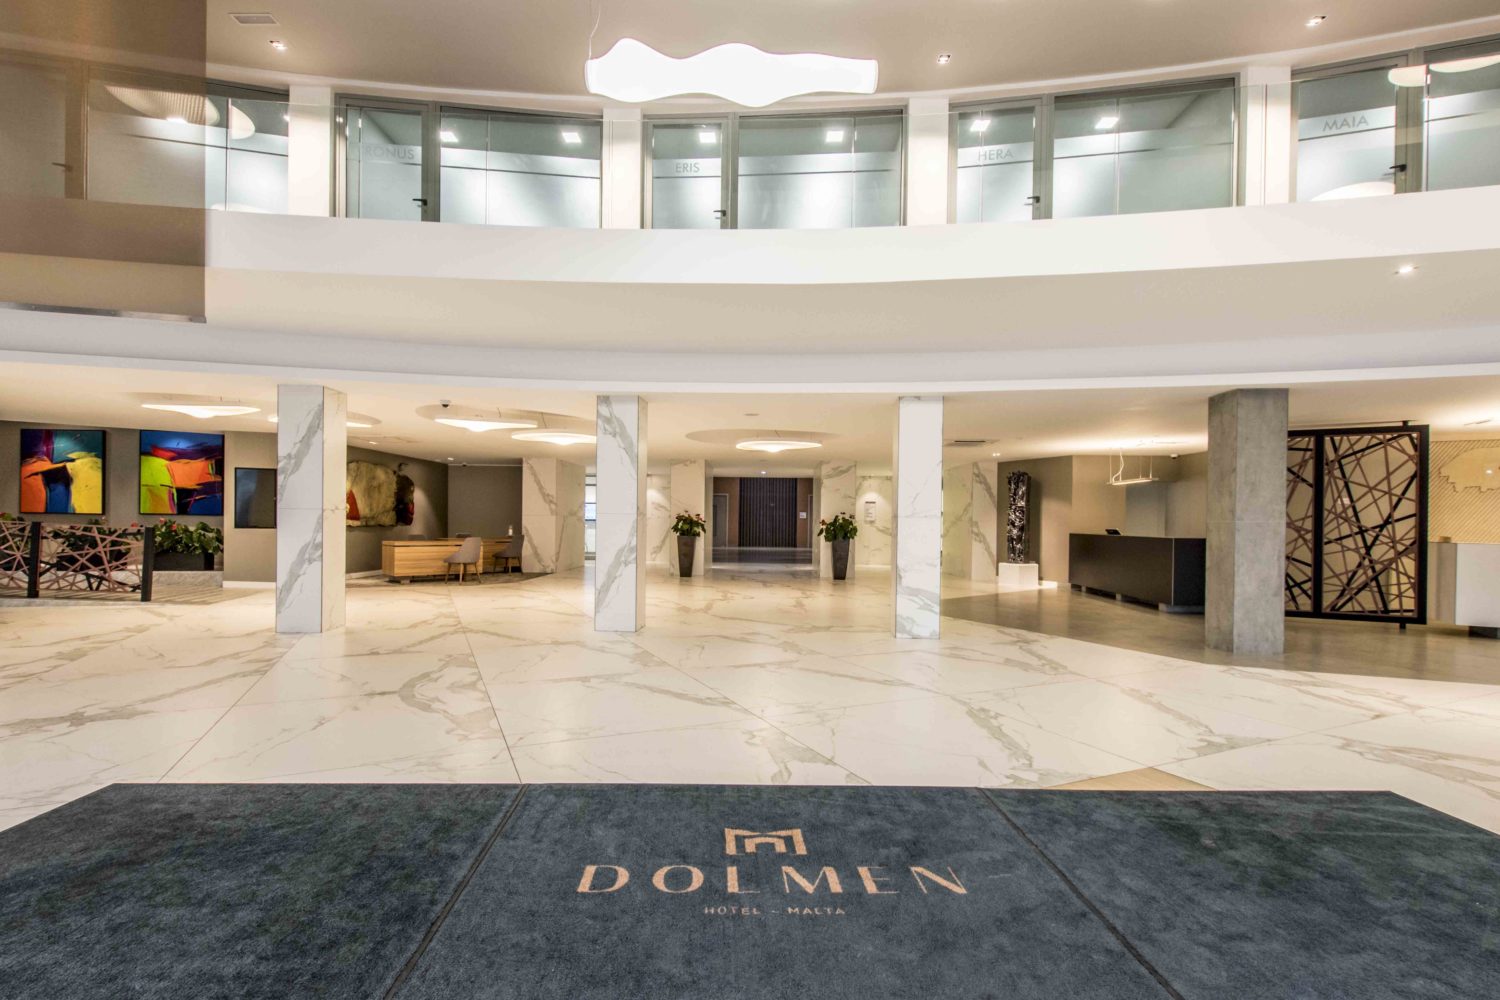 Dolmen hotel Malte lobby